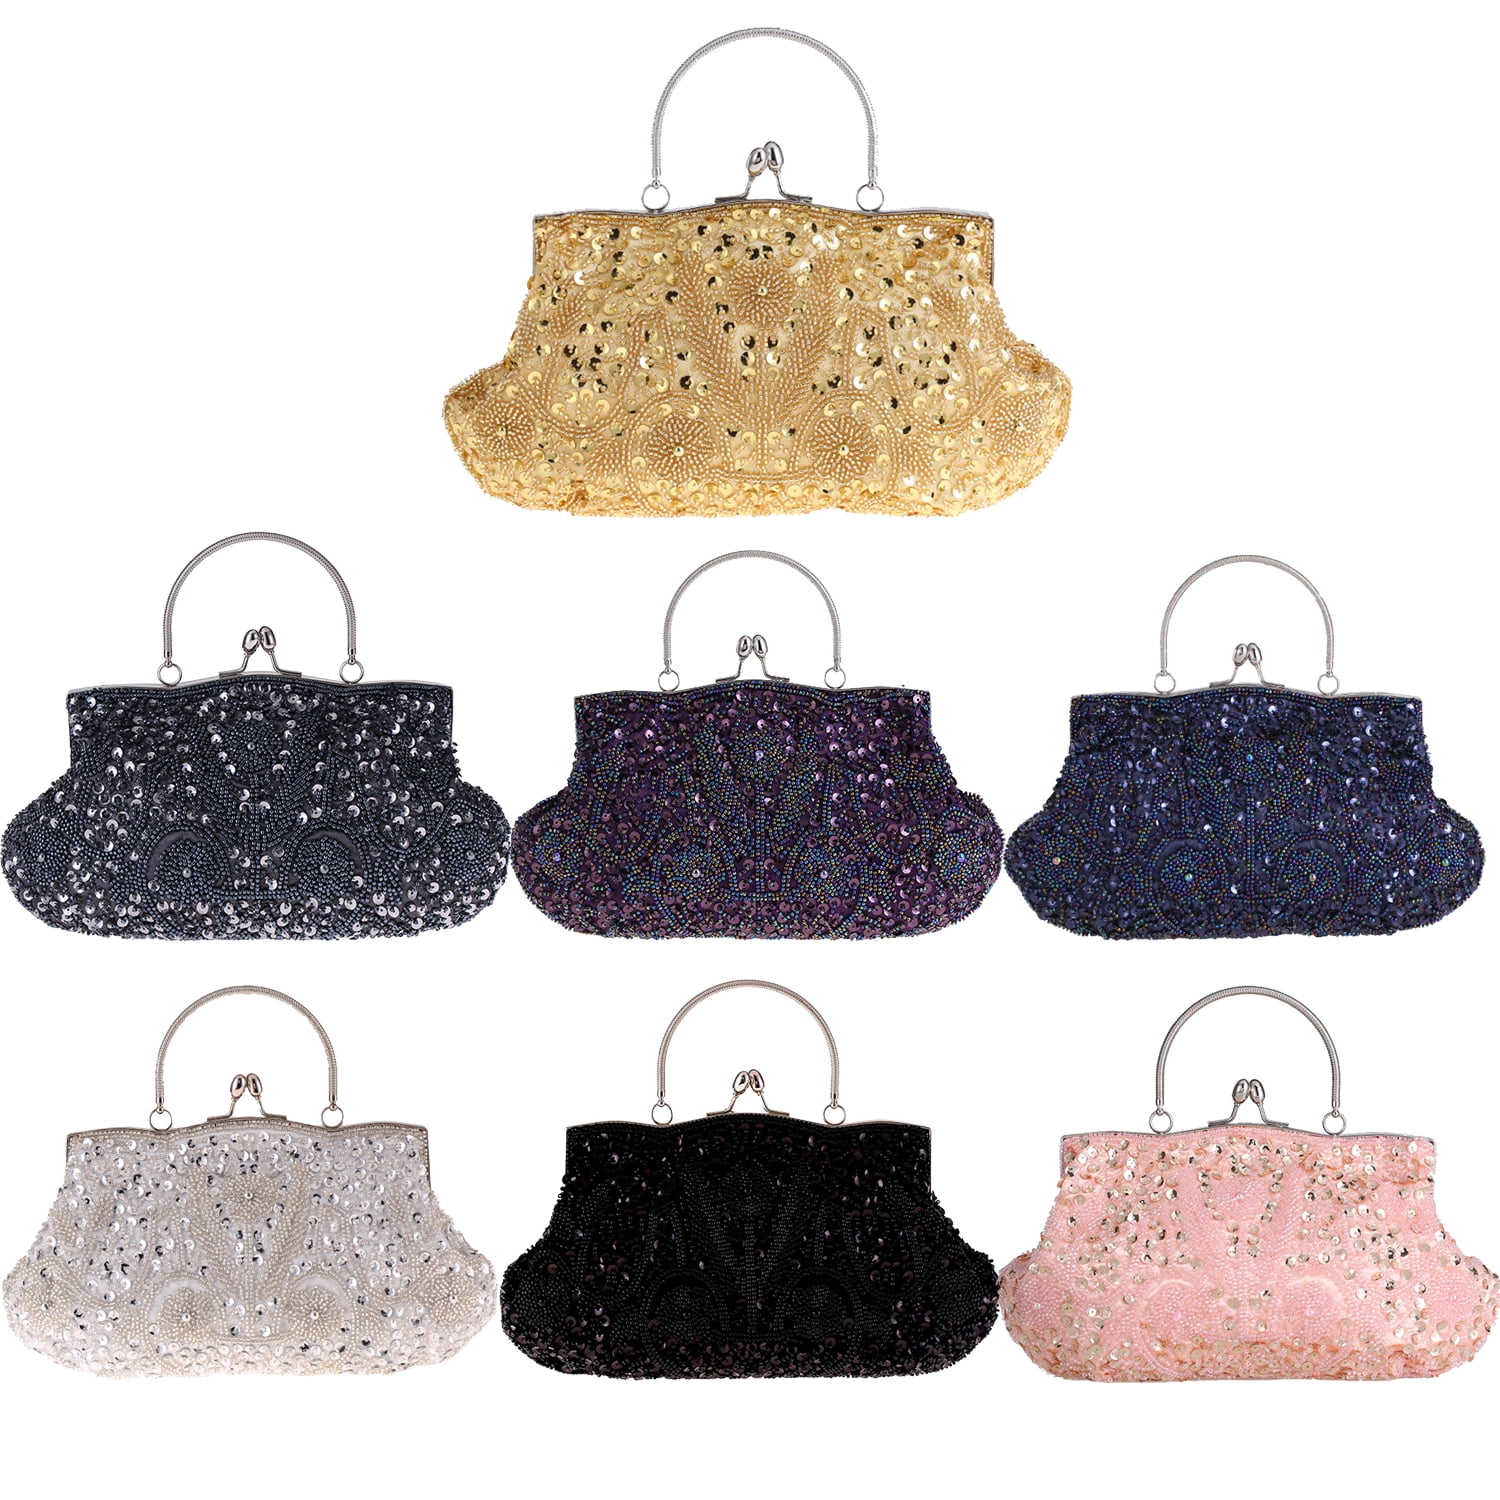 Latest design women hand purse colorful| Alibaba.com